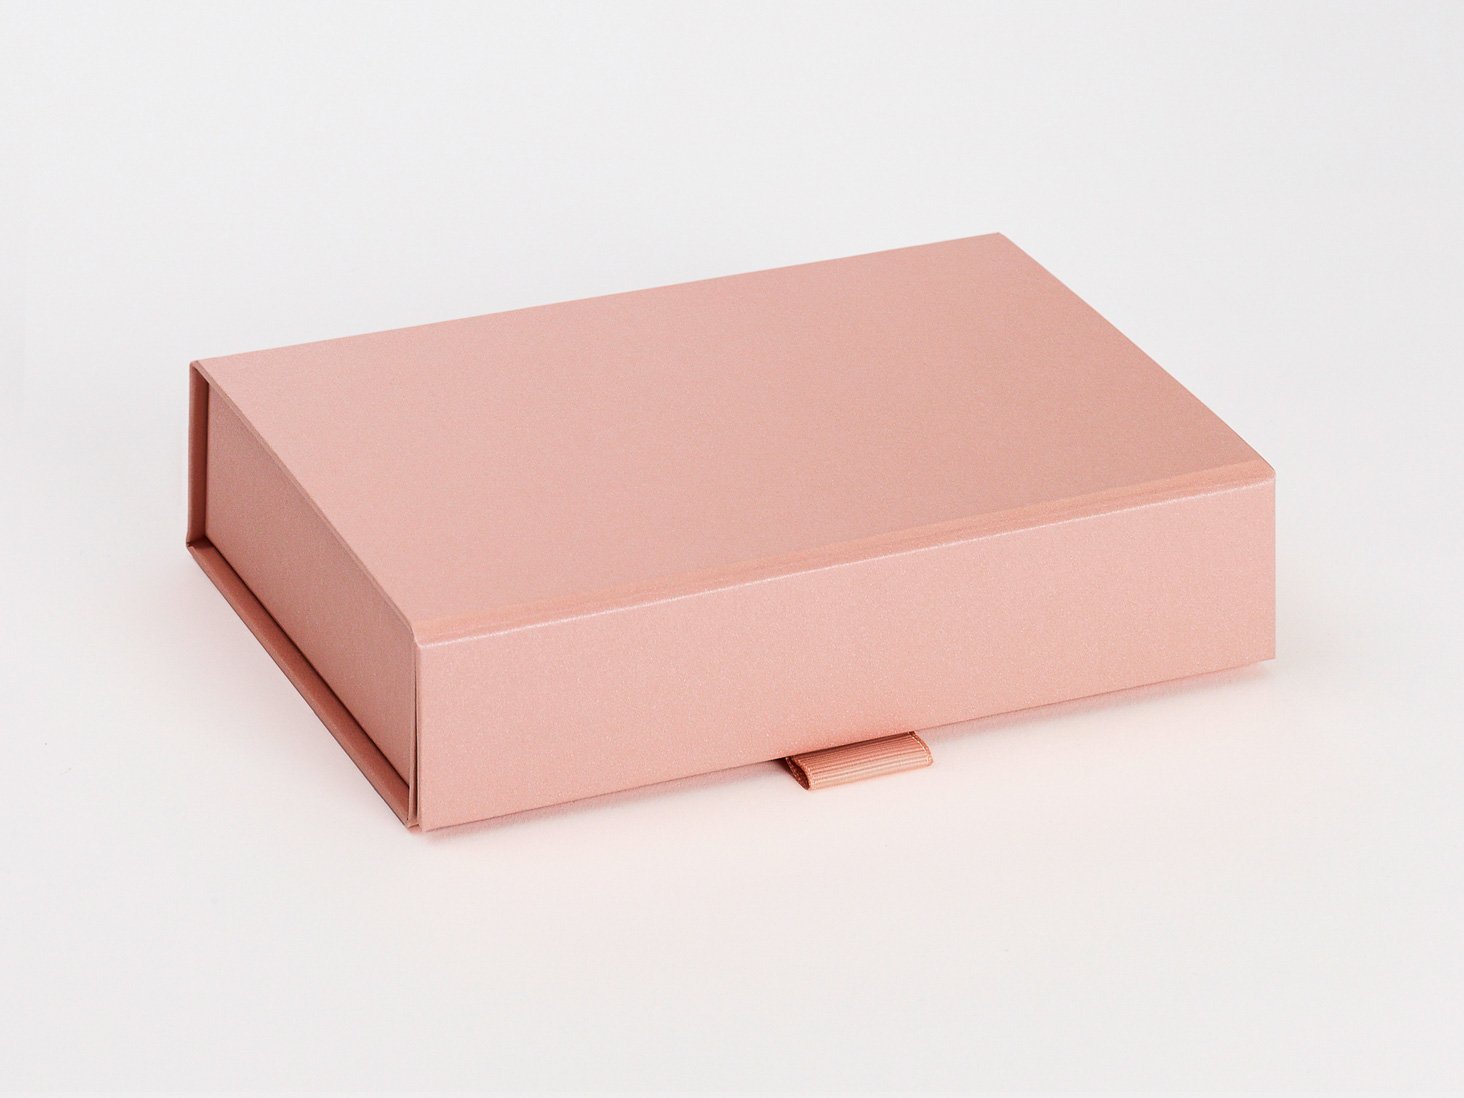 Rose Gold A6 Shallow Folding Gift Box from Foldabox